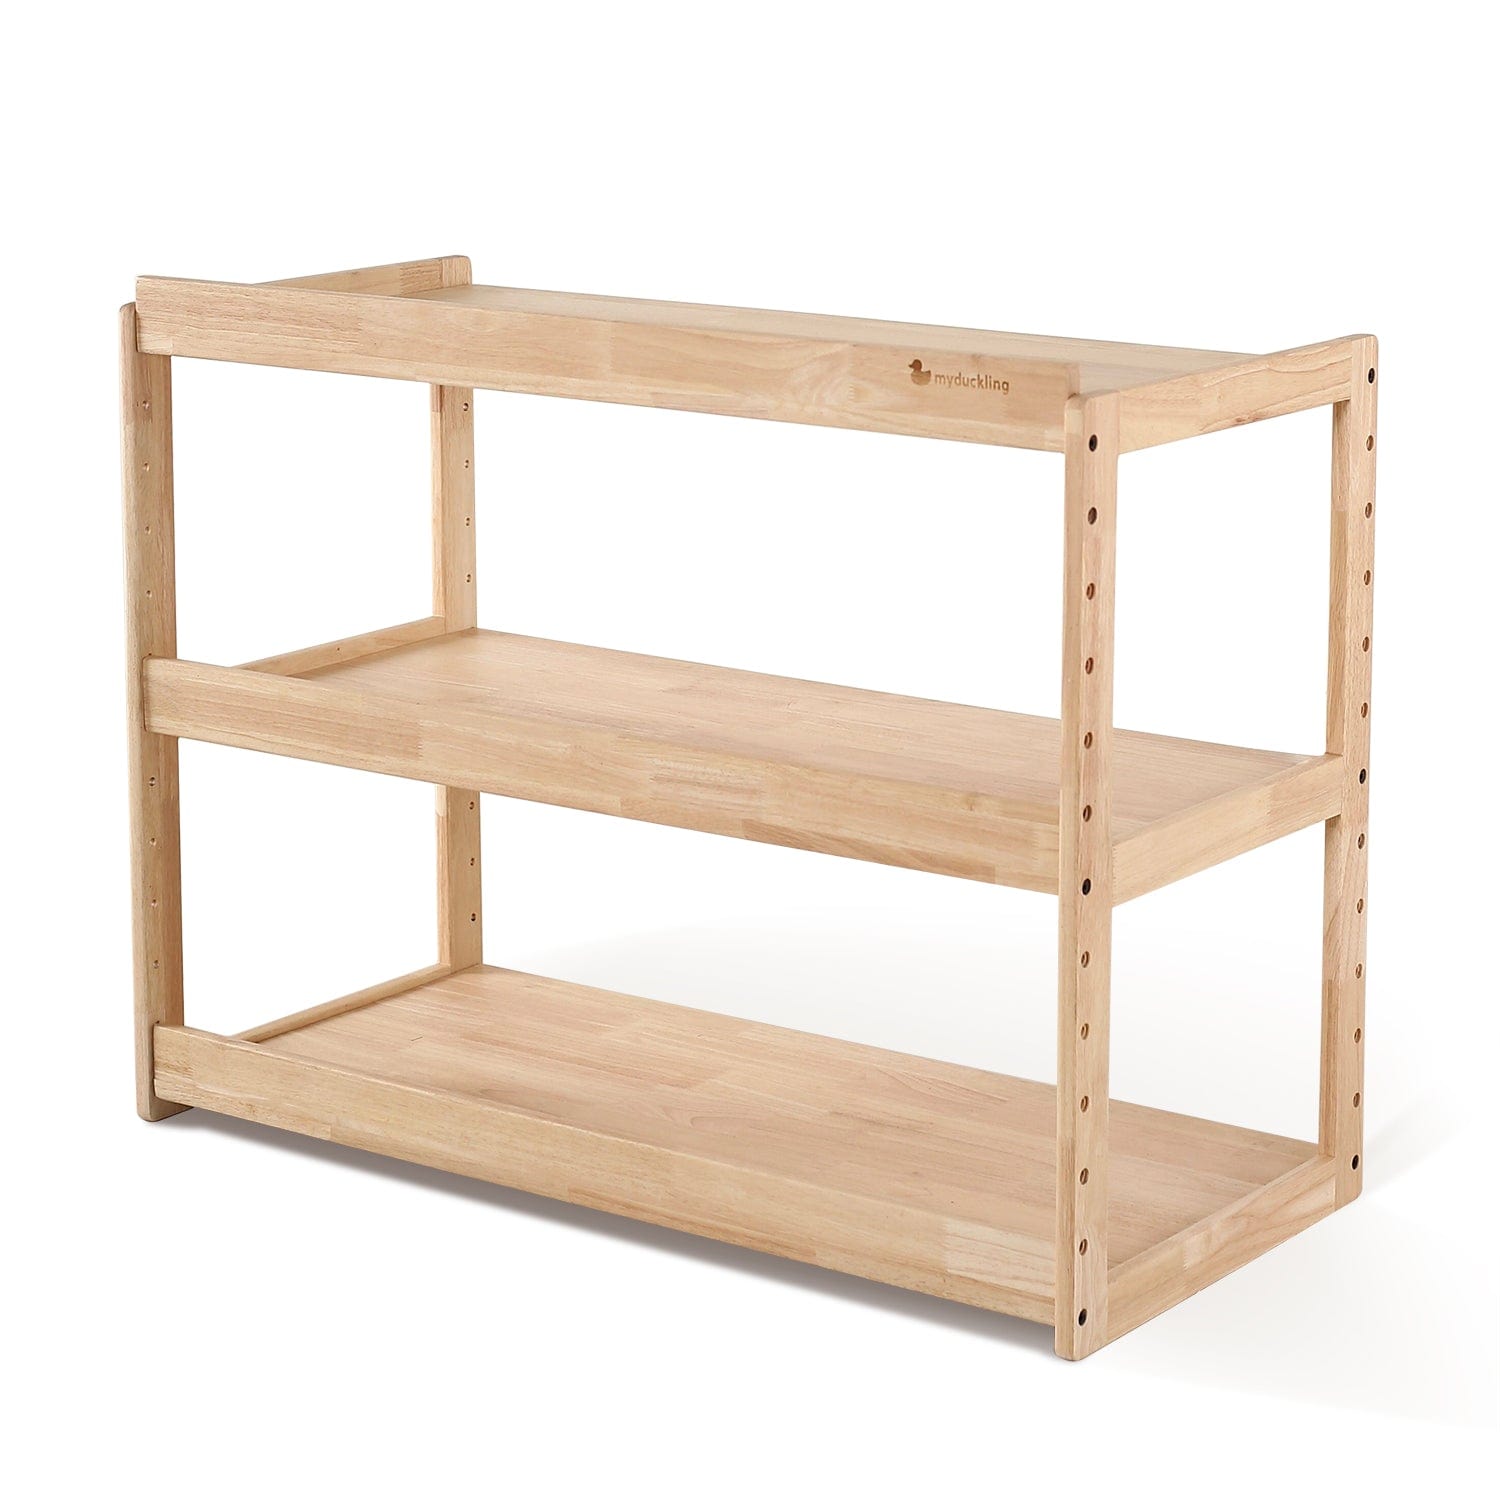 My Duckling NALA Solid Wood 3 Layer Storage Shelf